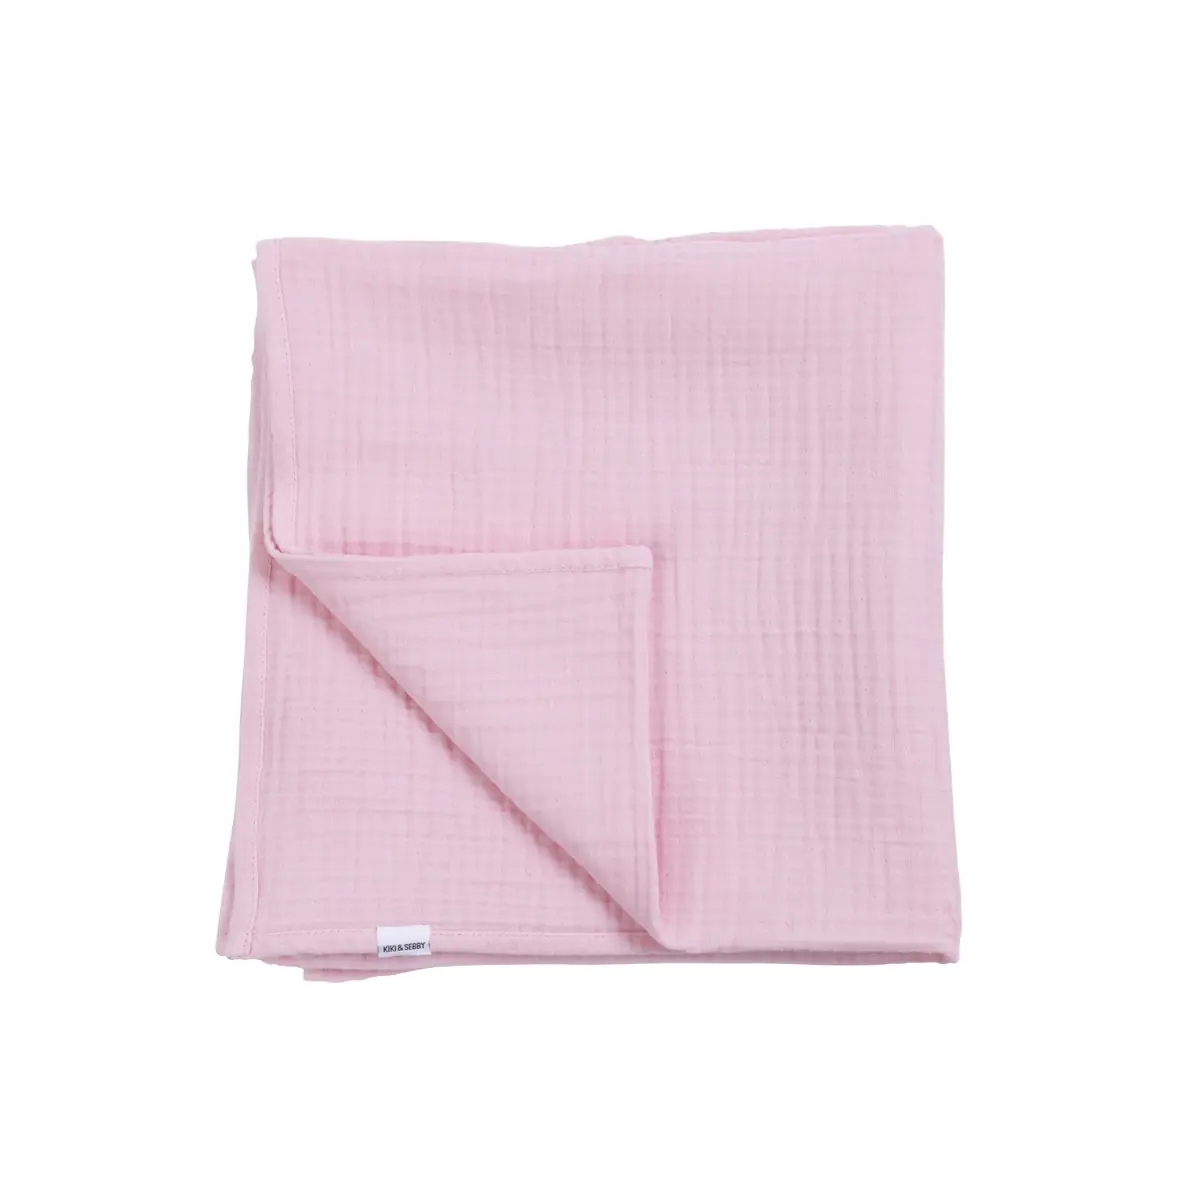 Image of Kiki & Sebby 100% Cotton Muslin Blanket - Pink